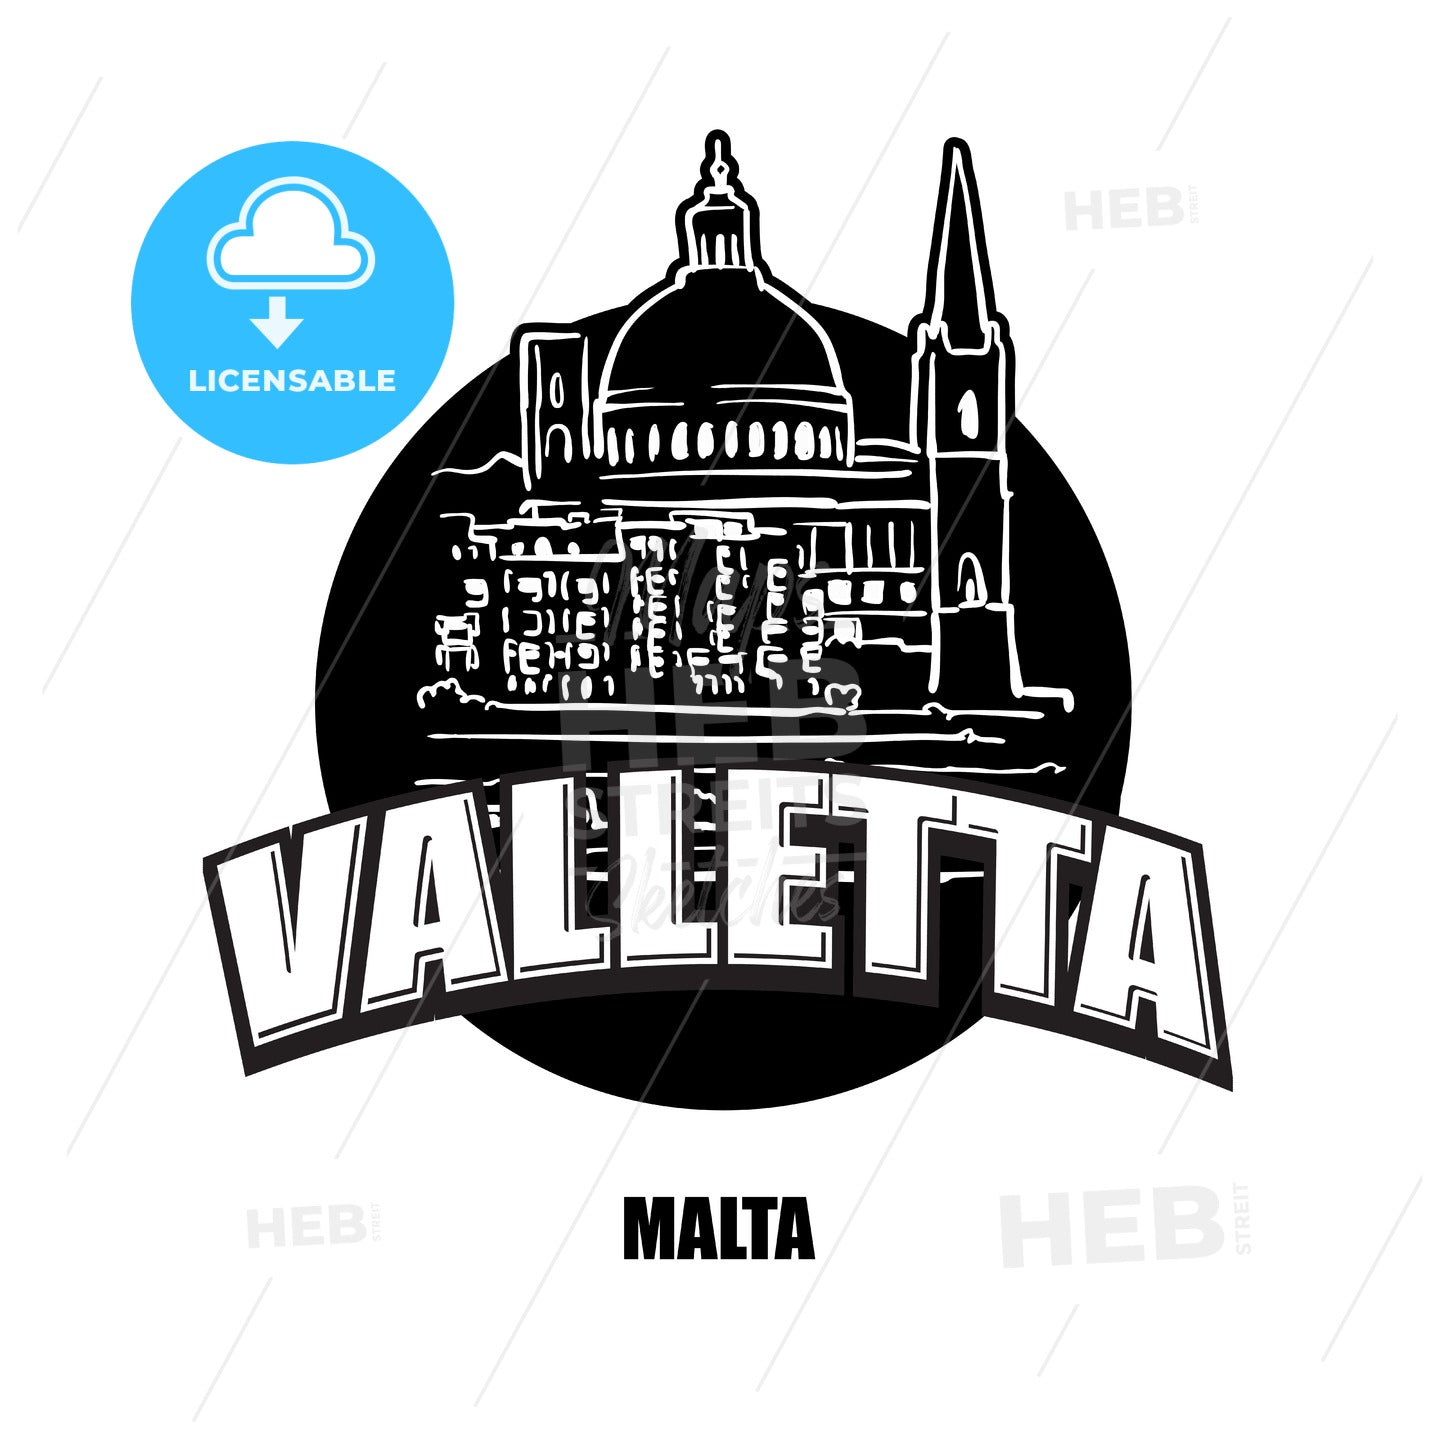 Valetta, Malta, black and white logo – instant download